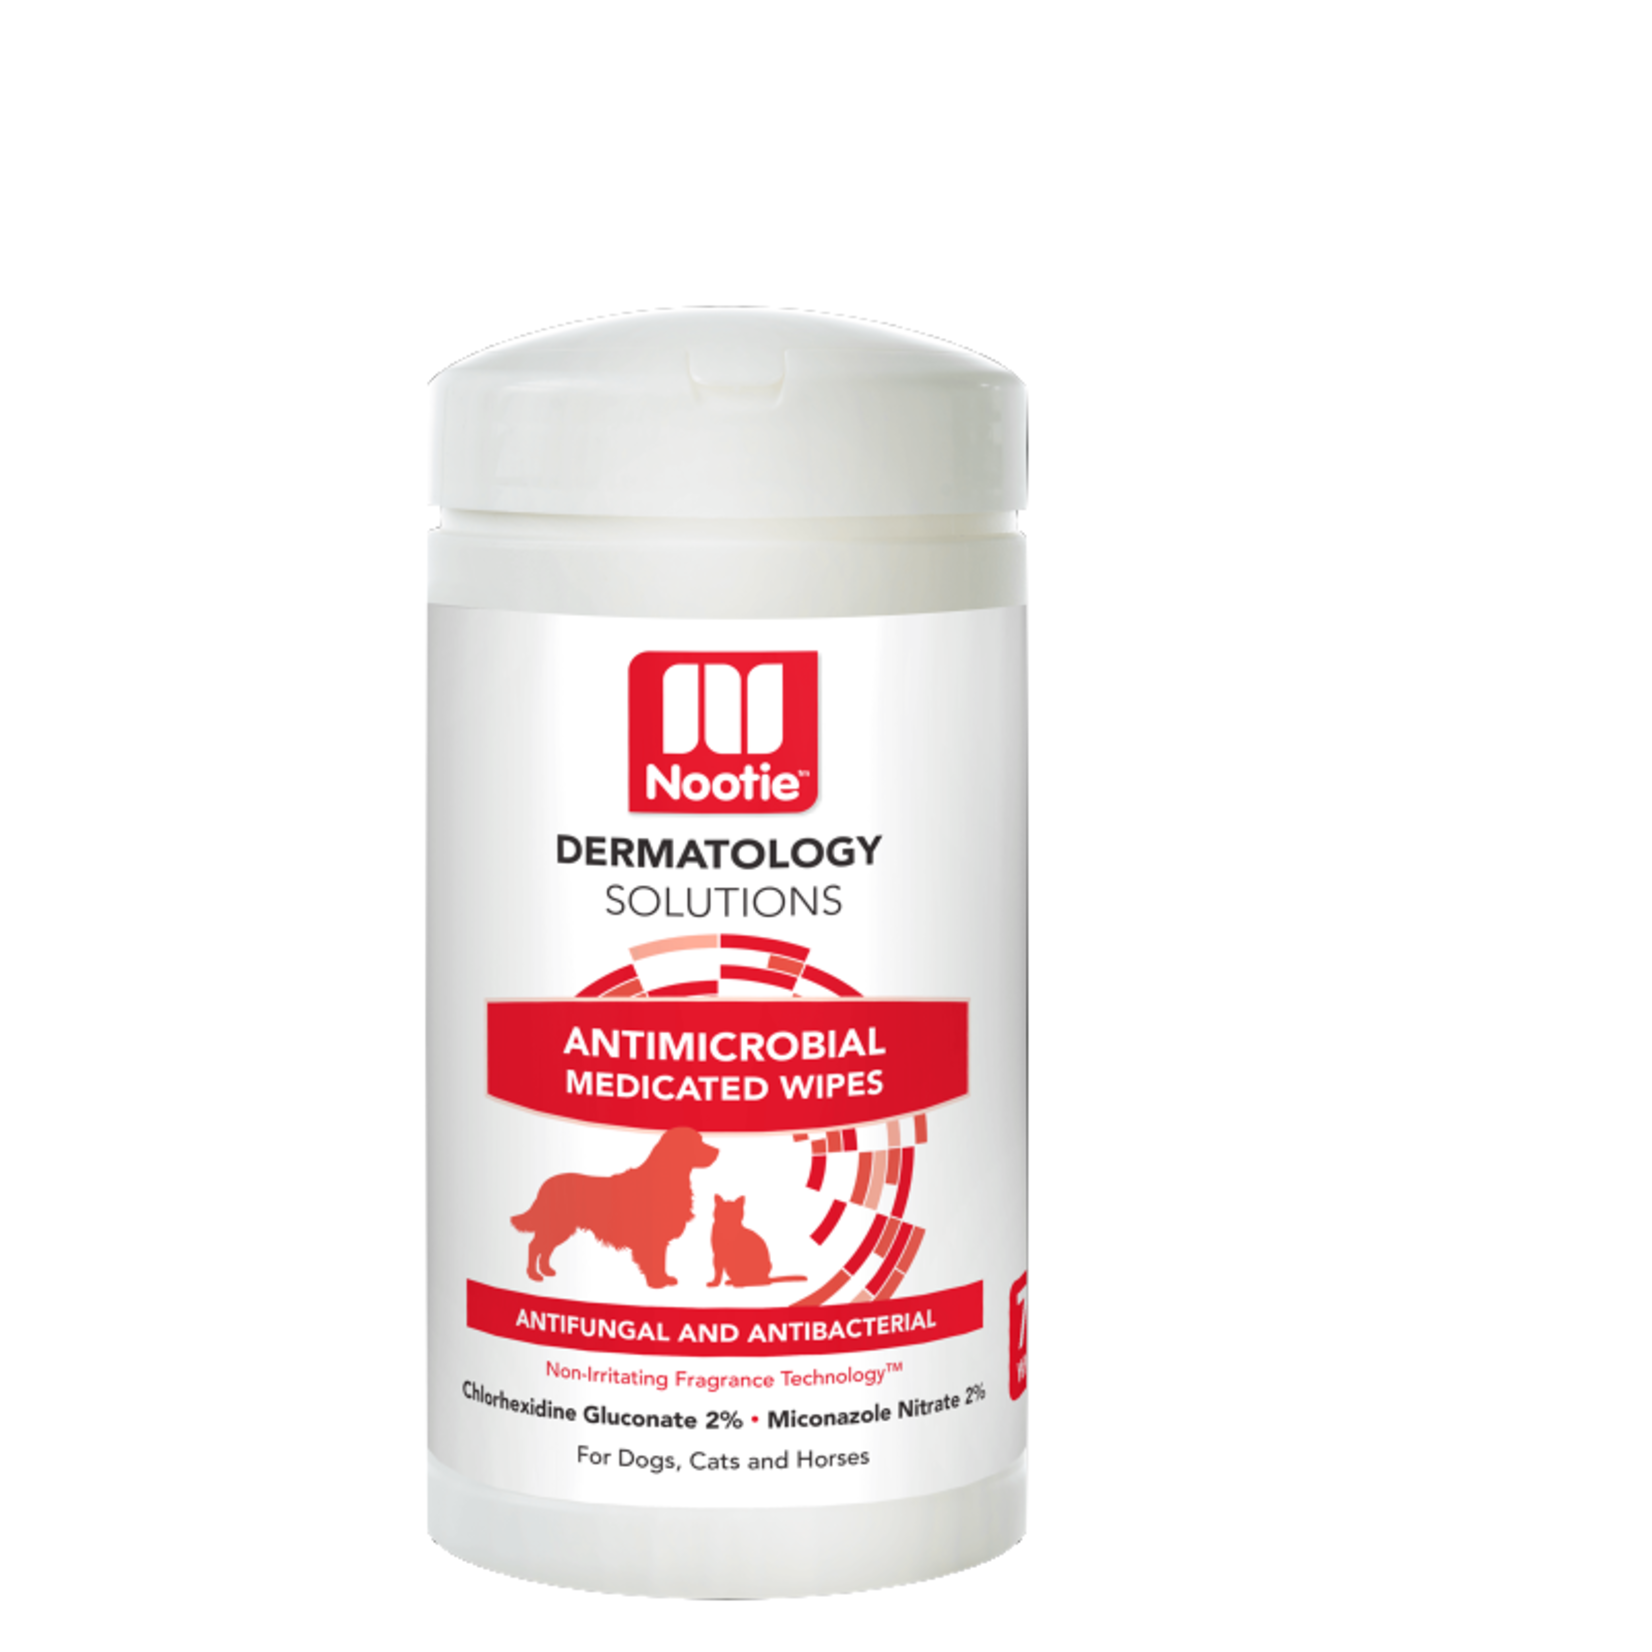 Nootie Nootie Antimicrobial Medicated Pet Wipes 70ct with Antifungal and Antibacterial Ingredients